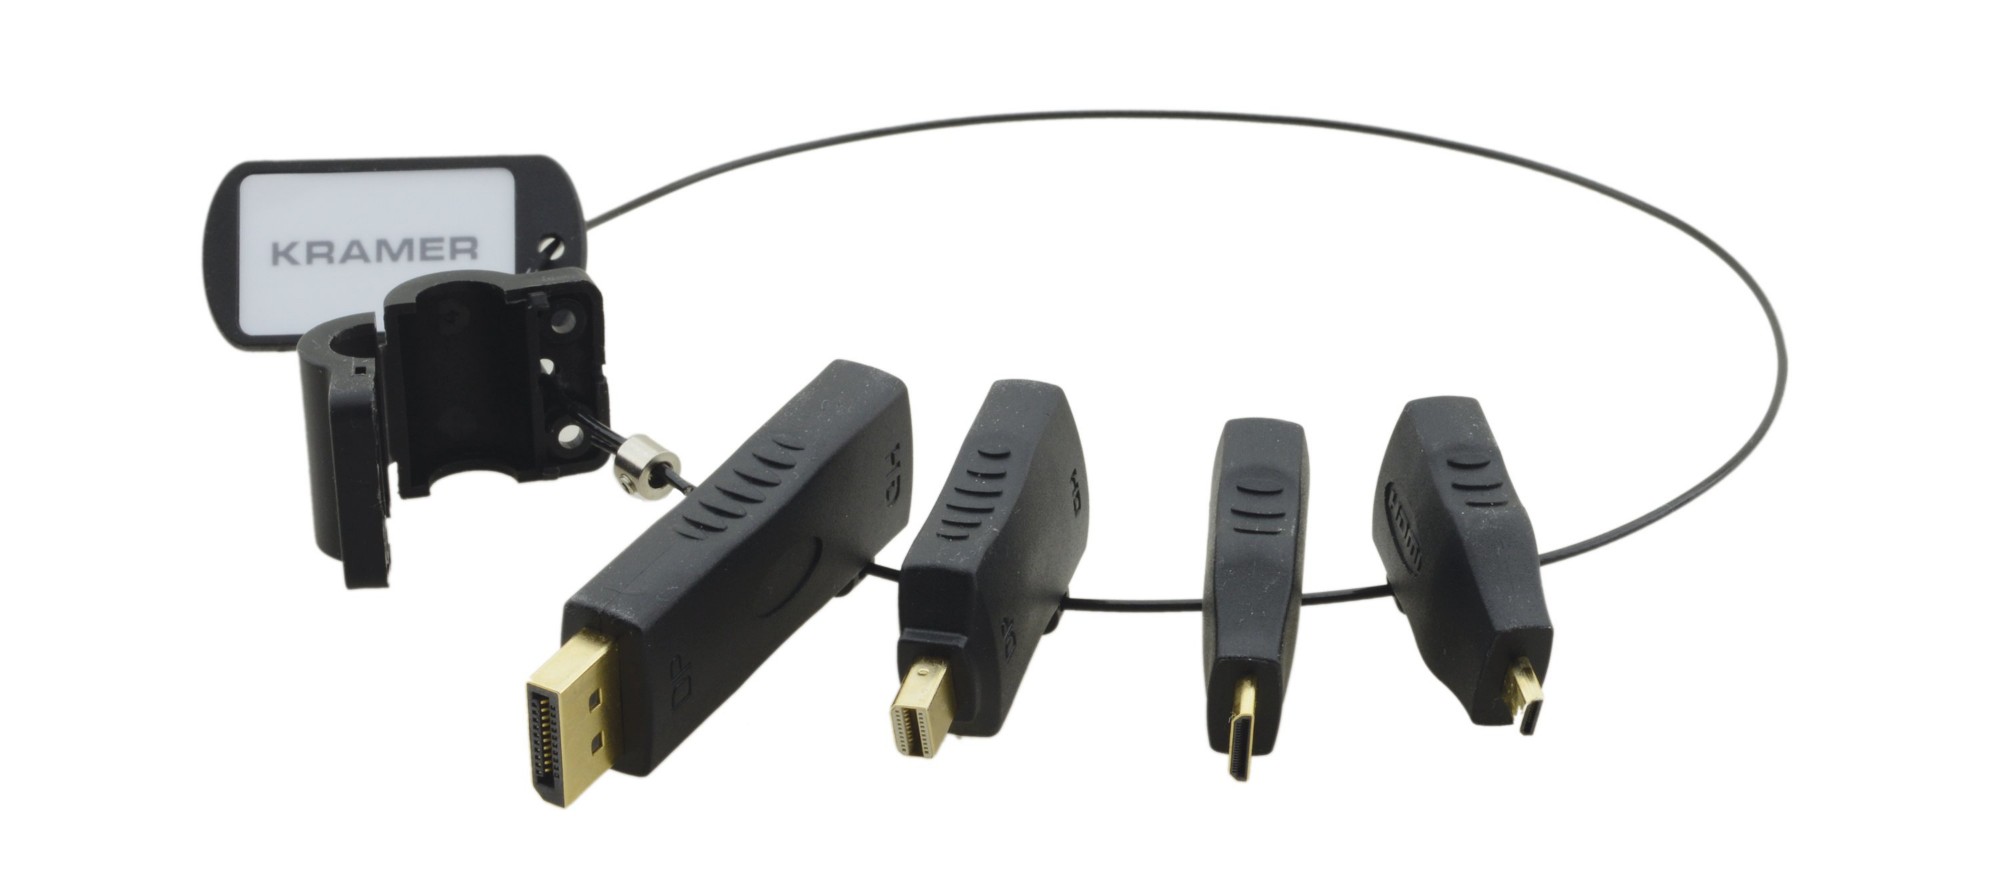 Photos - Cable (video, audio, USB) Kramer Electronics AD-RING-2 Black 